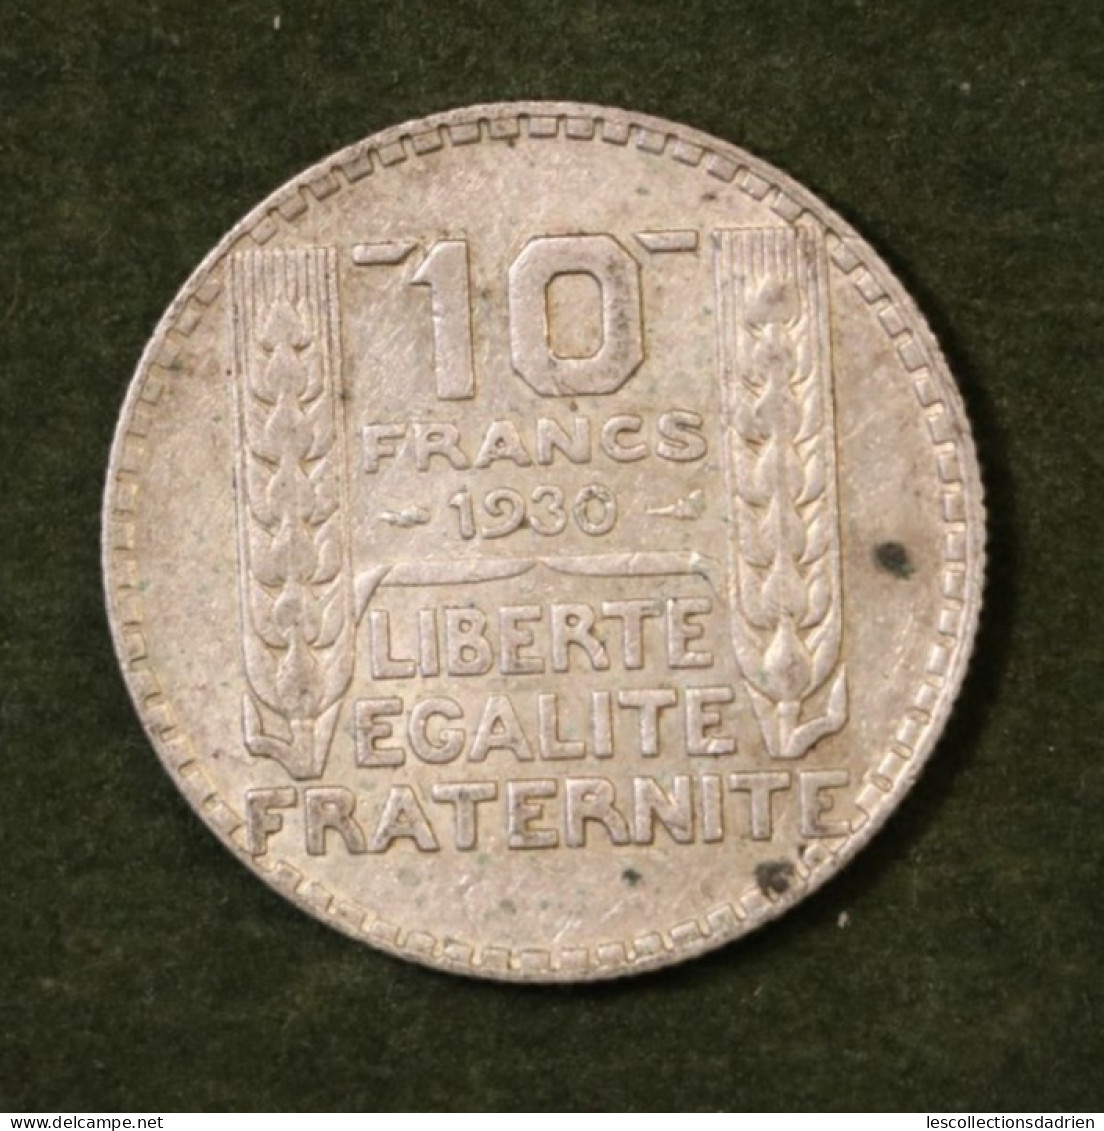 Pièce En Argent Française 10 Francs Turin 1930  - French Silver Coin - 10 Francs